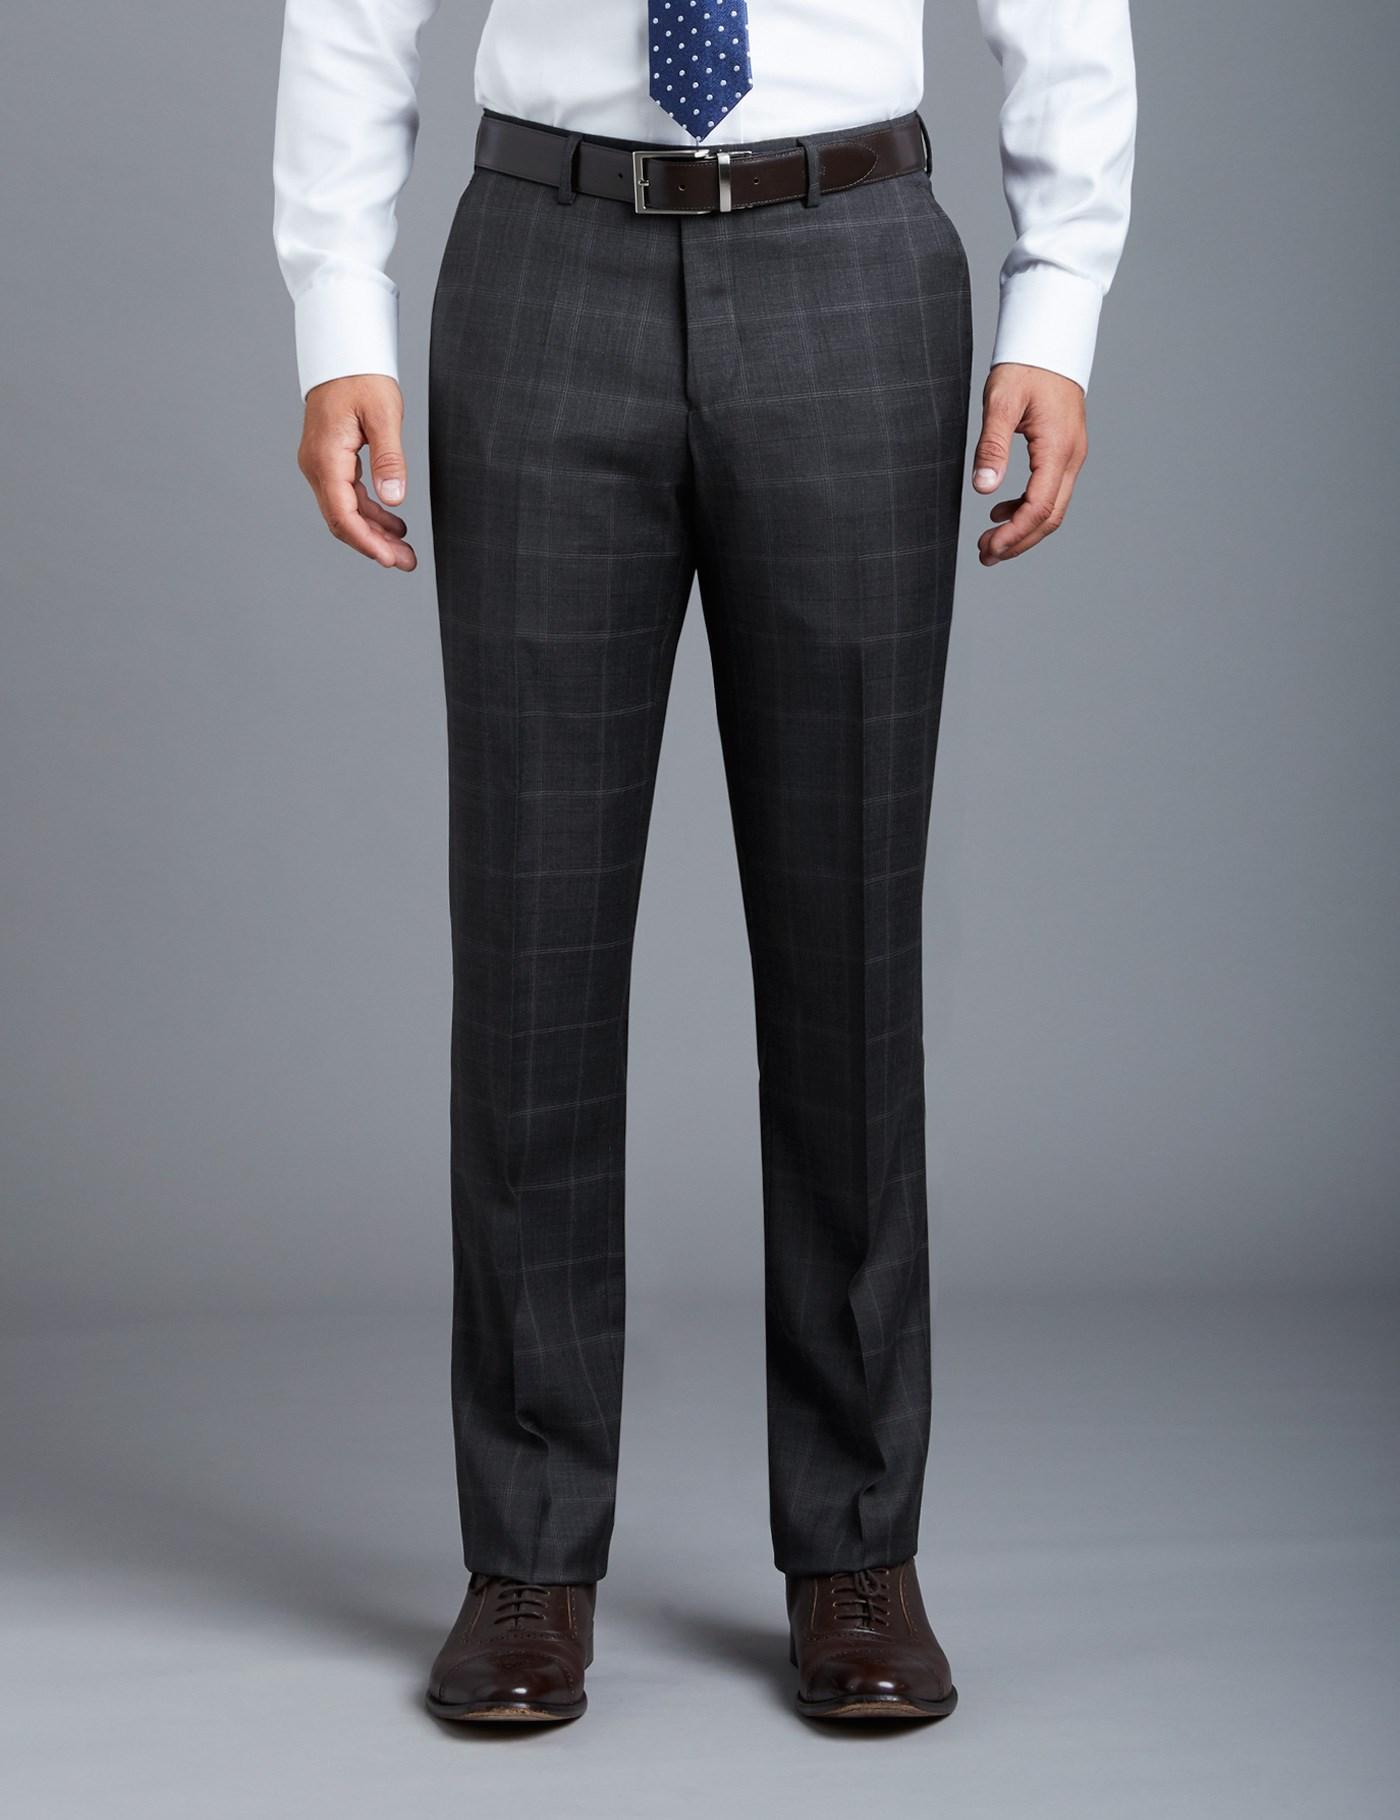 Hawes & Curtis Charcoal Grey Overcheck Slim Fit Suit Pants 30